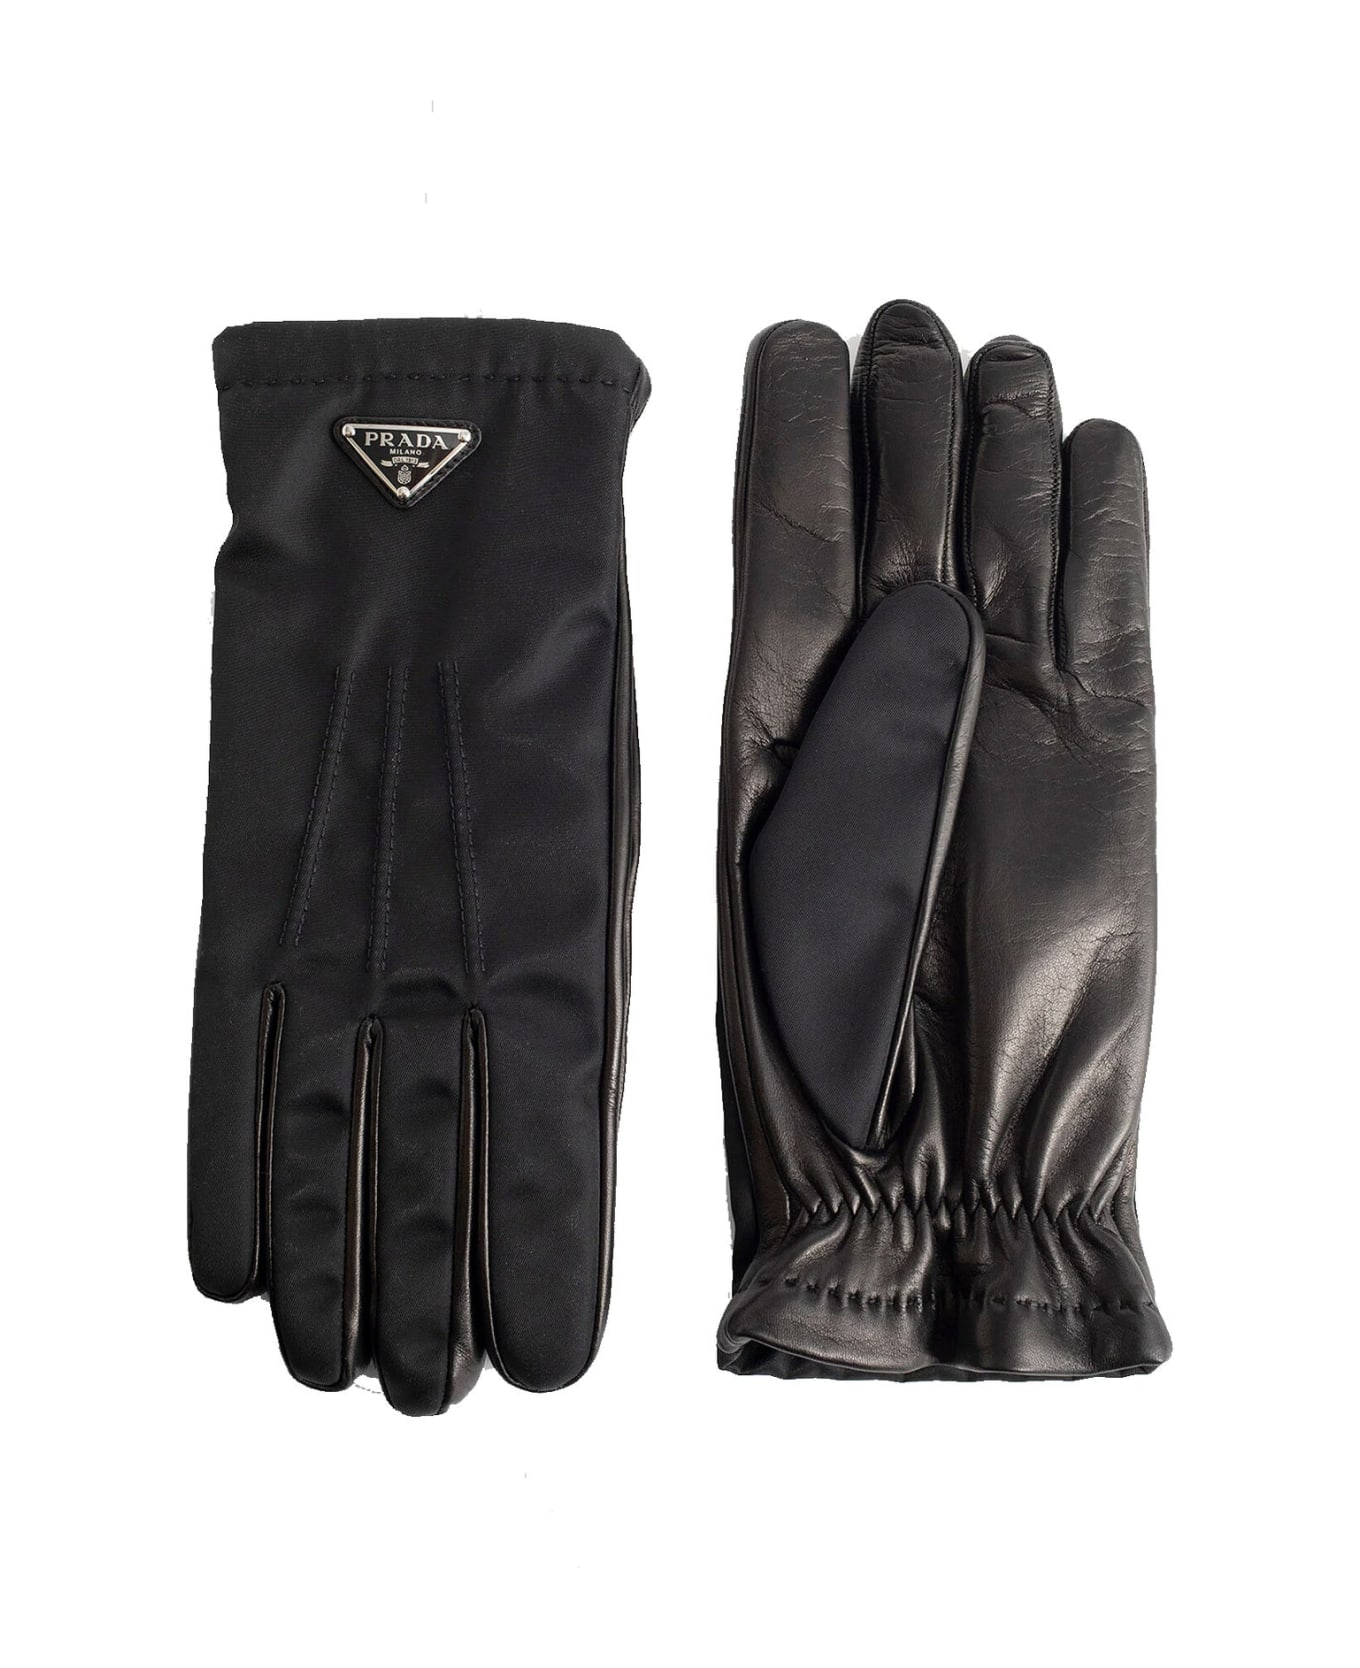 Prada Nylon And Leather Gloves - Black